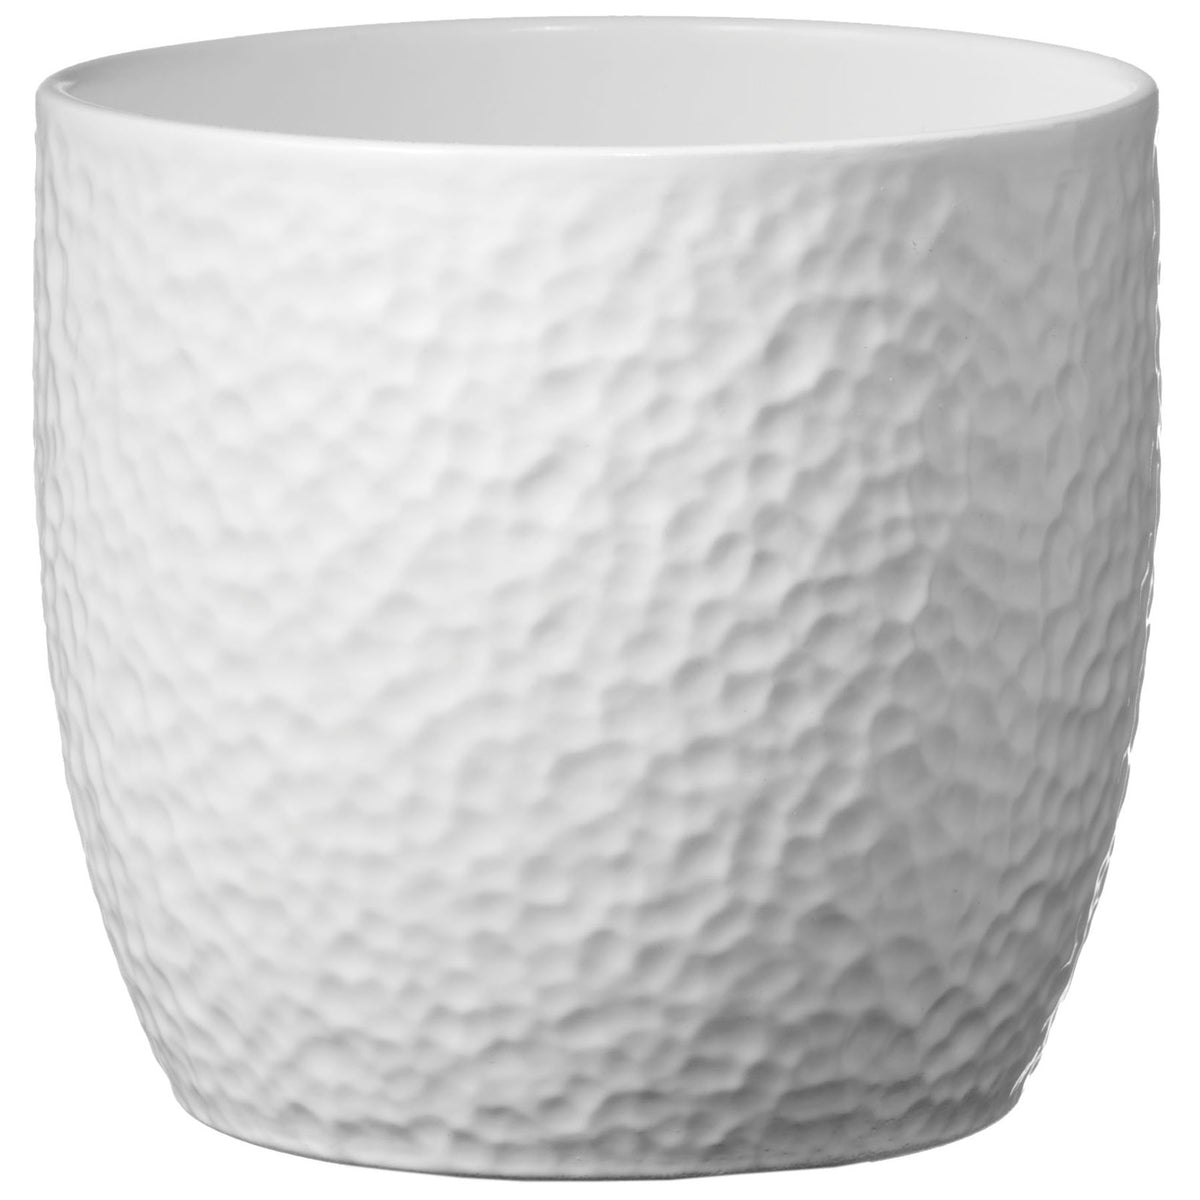 6.3&quot; White Ceramic Boston Pot